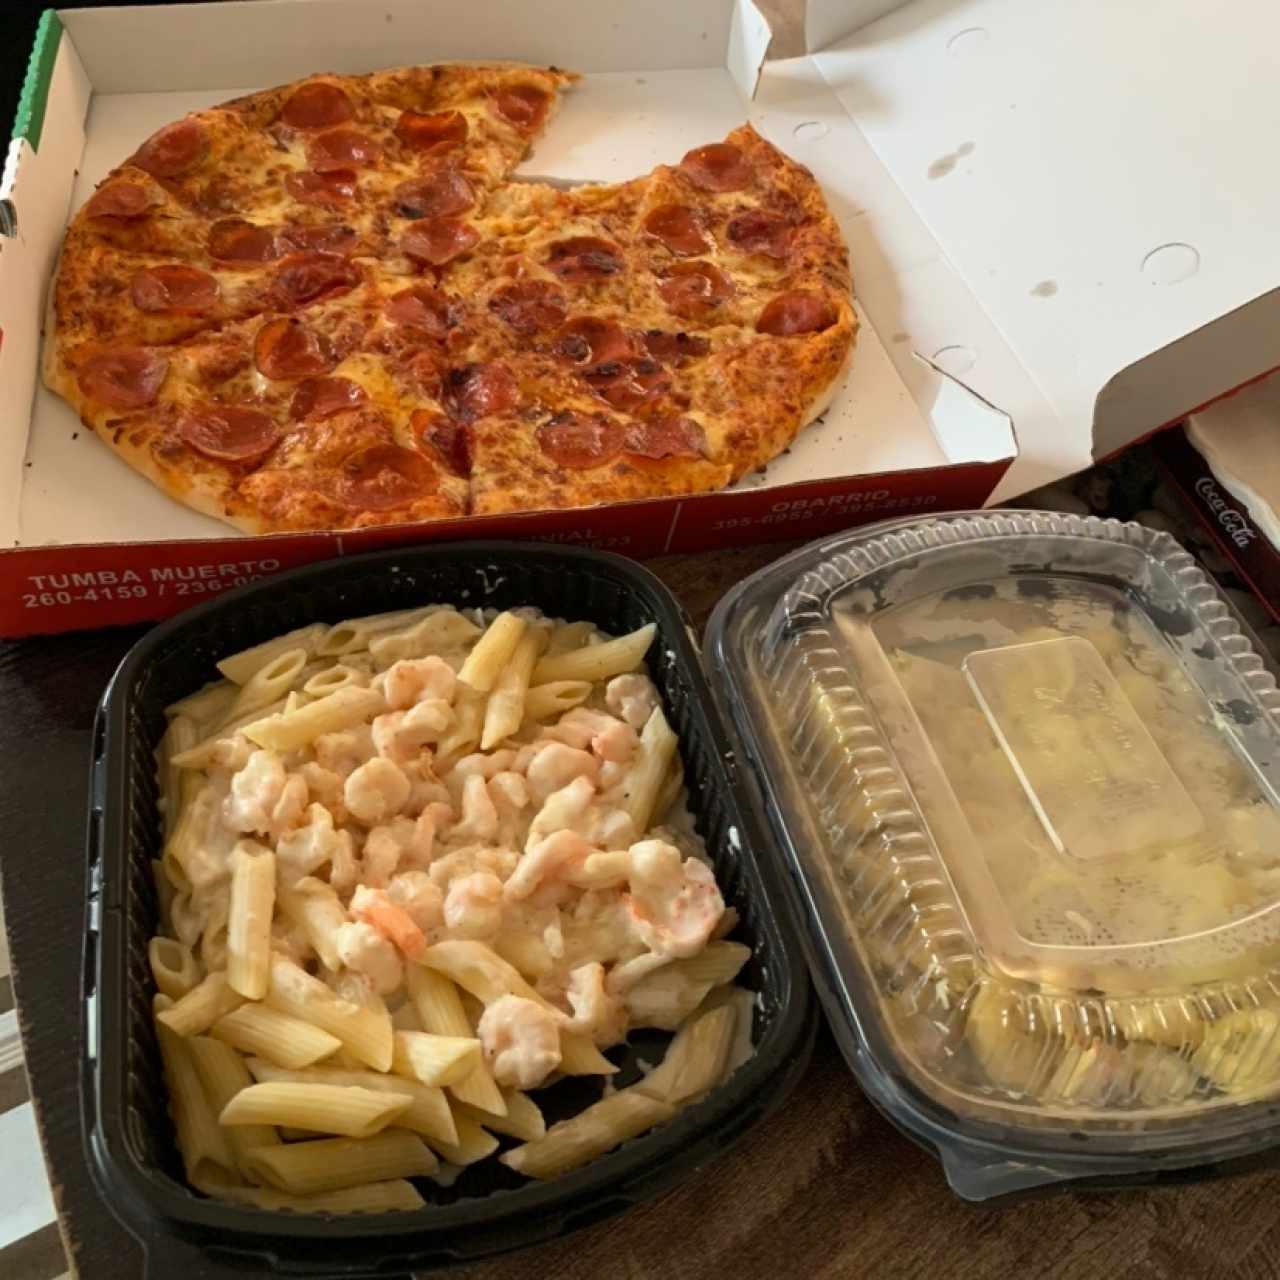 Pizza peperoni, pene gon camarones y tortellini carbonara